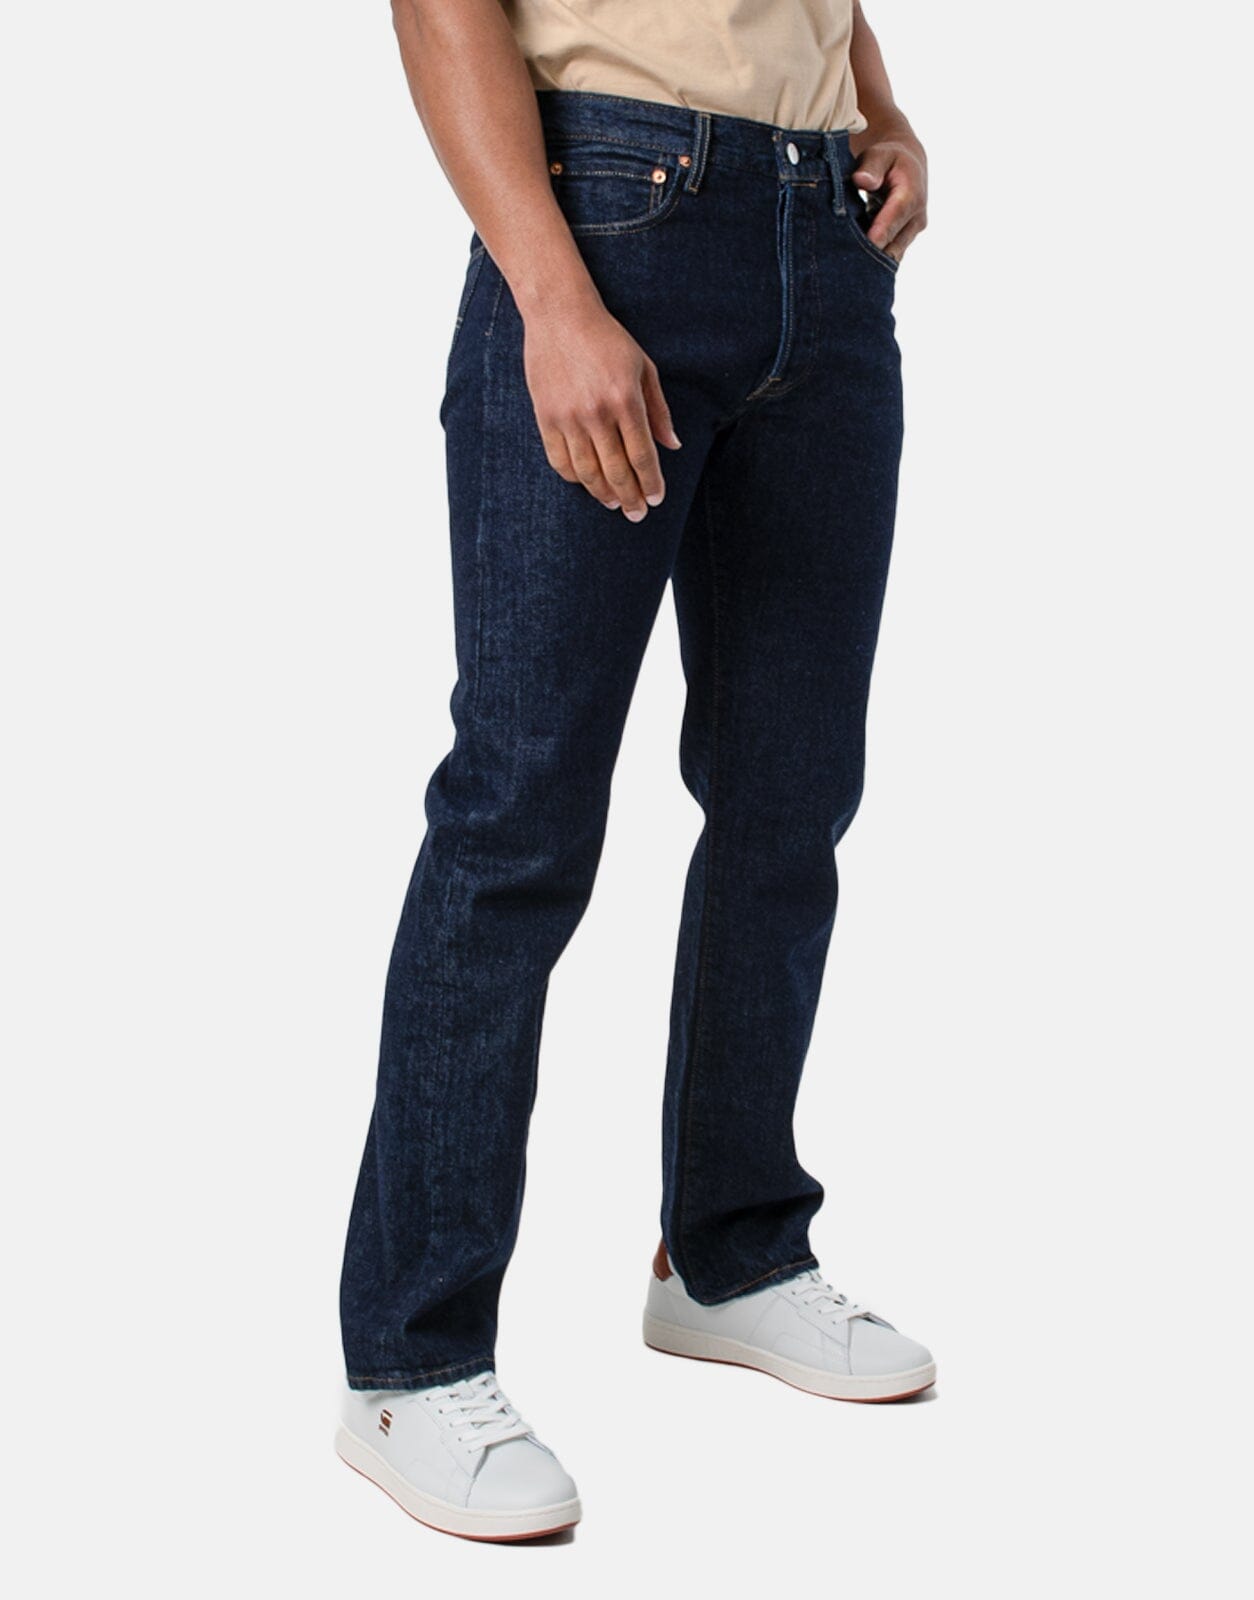 Levi's 501 Original Rinse Jeans - Subwear